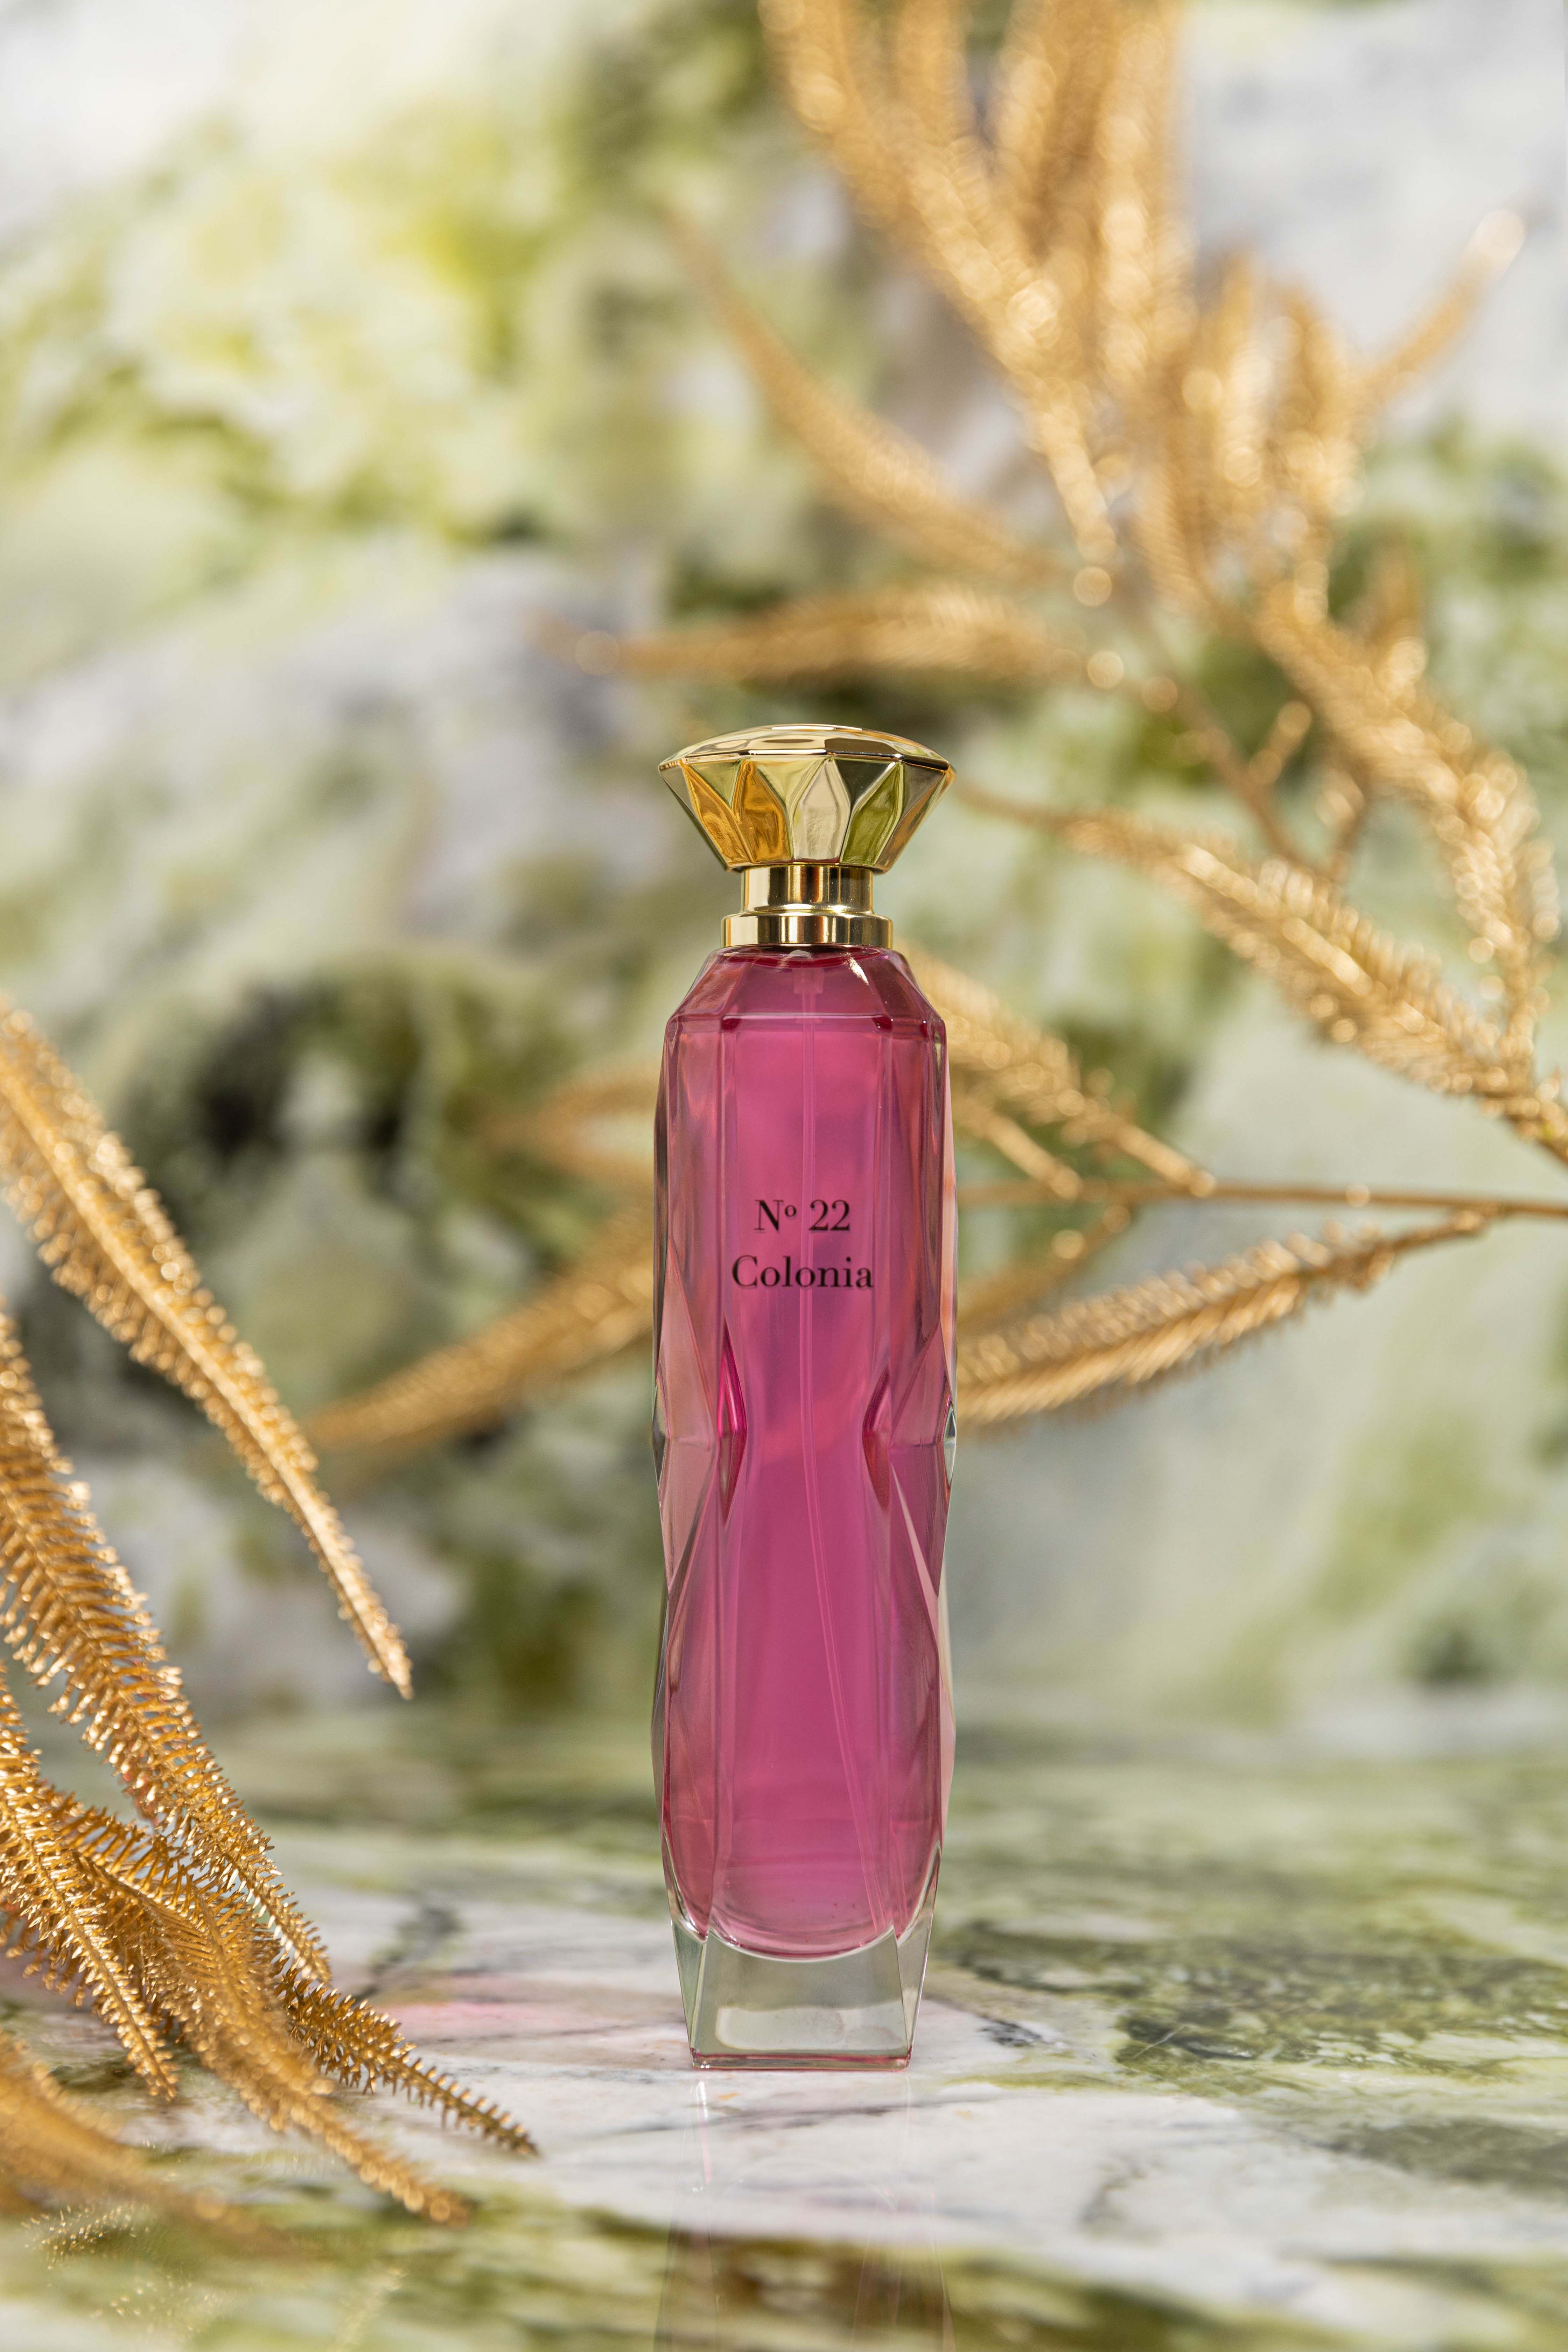 Colonia No22 Mauzan perfume - a fragrance for women and men 2014